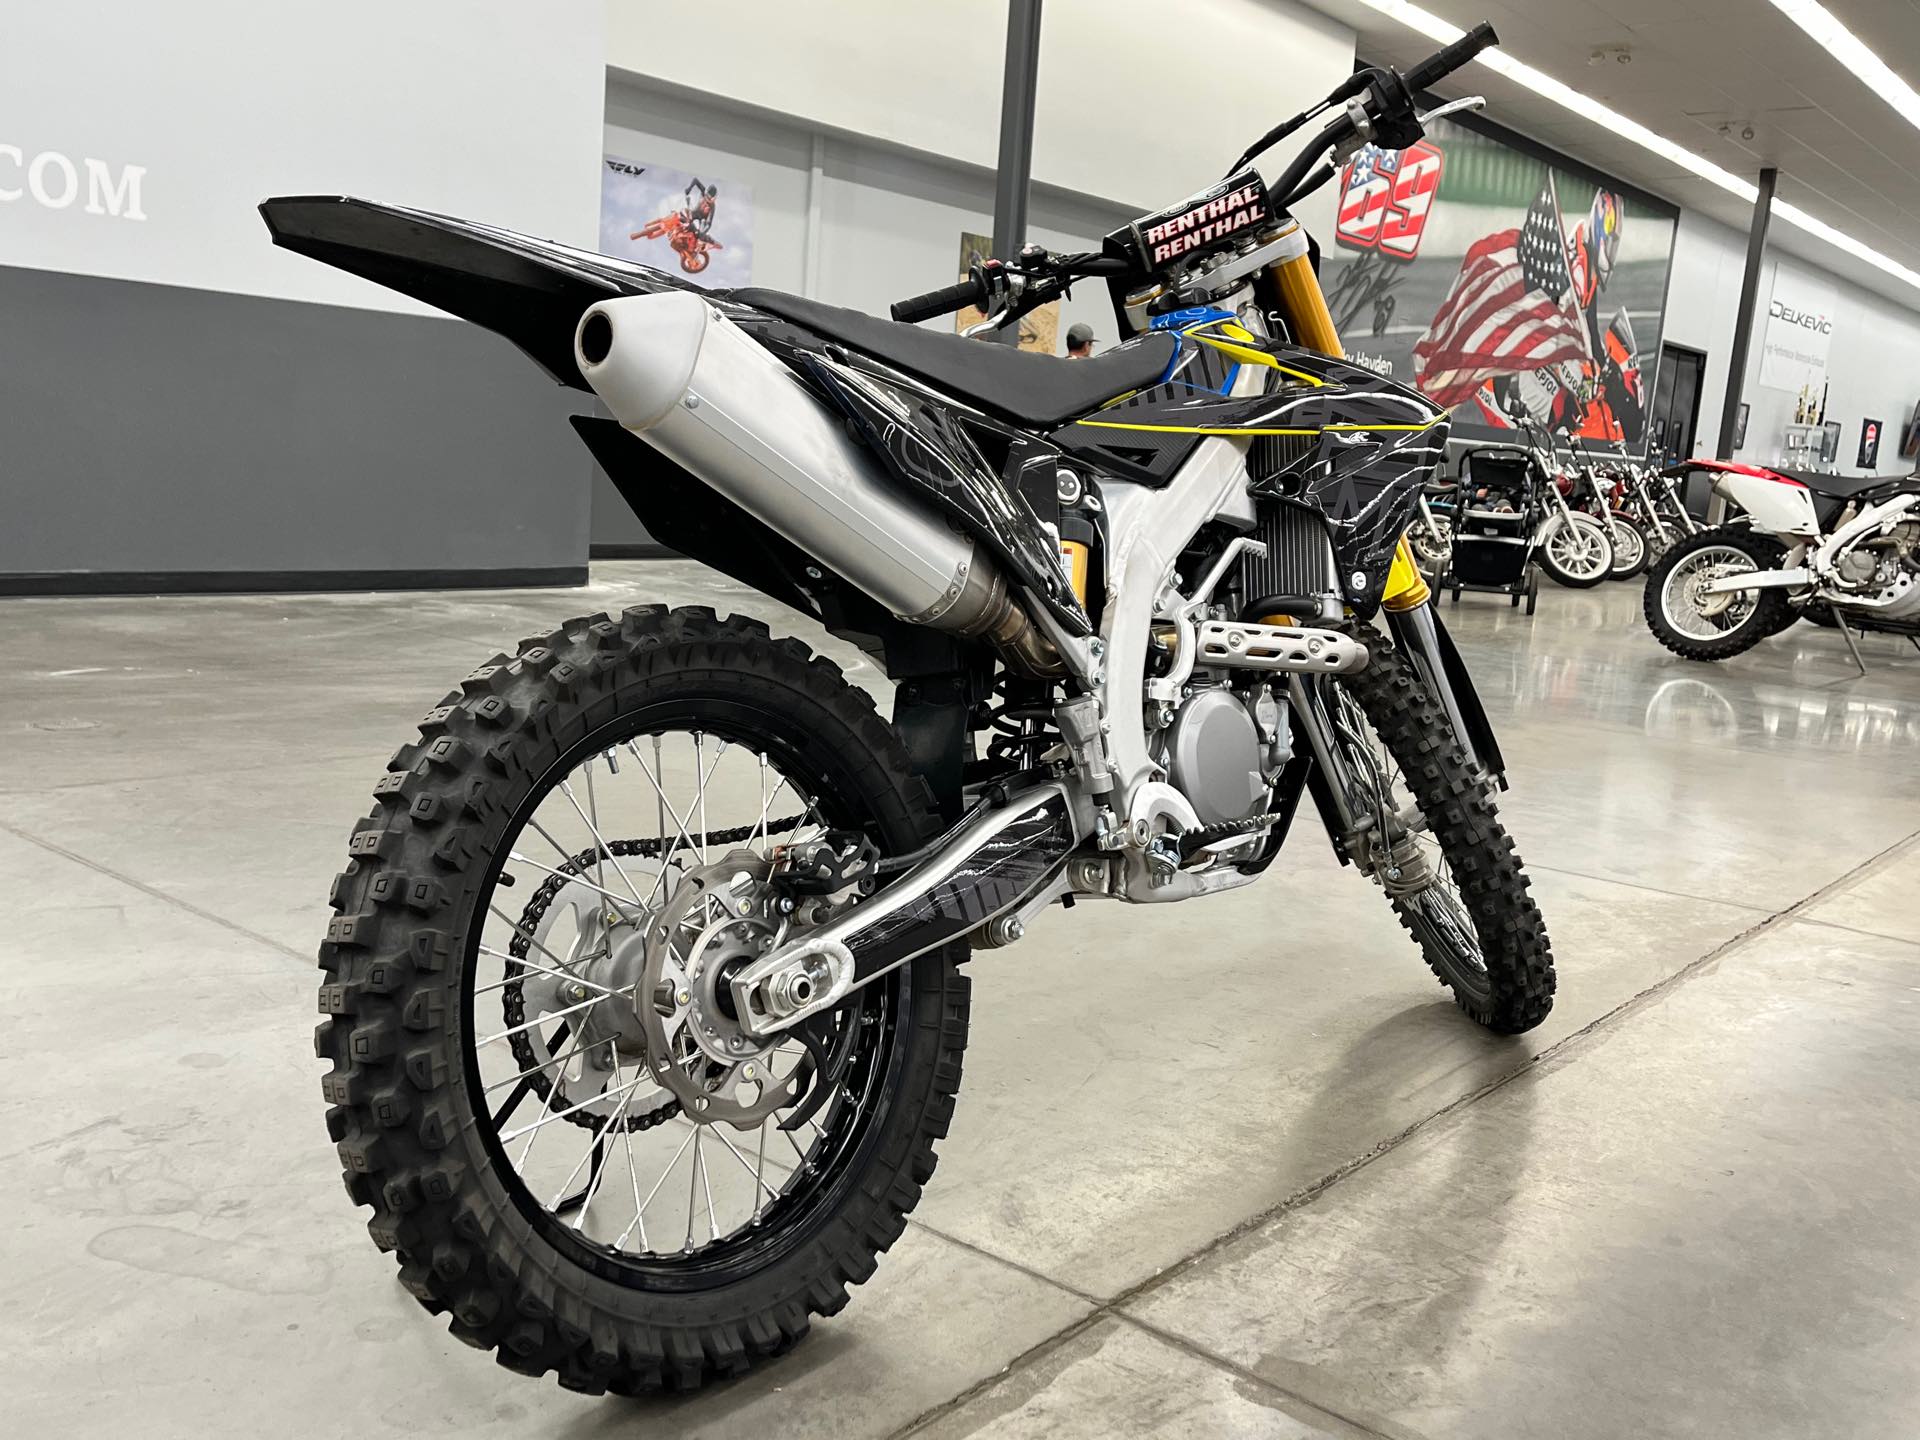 2020 Suzuki RM-Z 450 at Aces Motorcycles - Denver